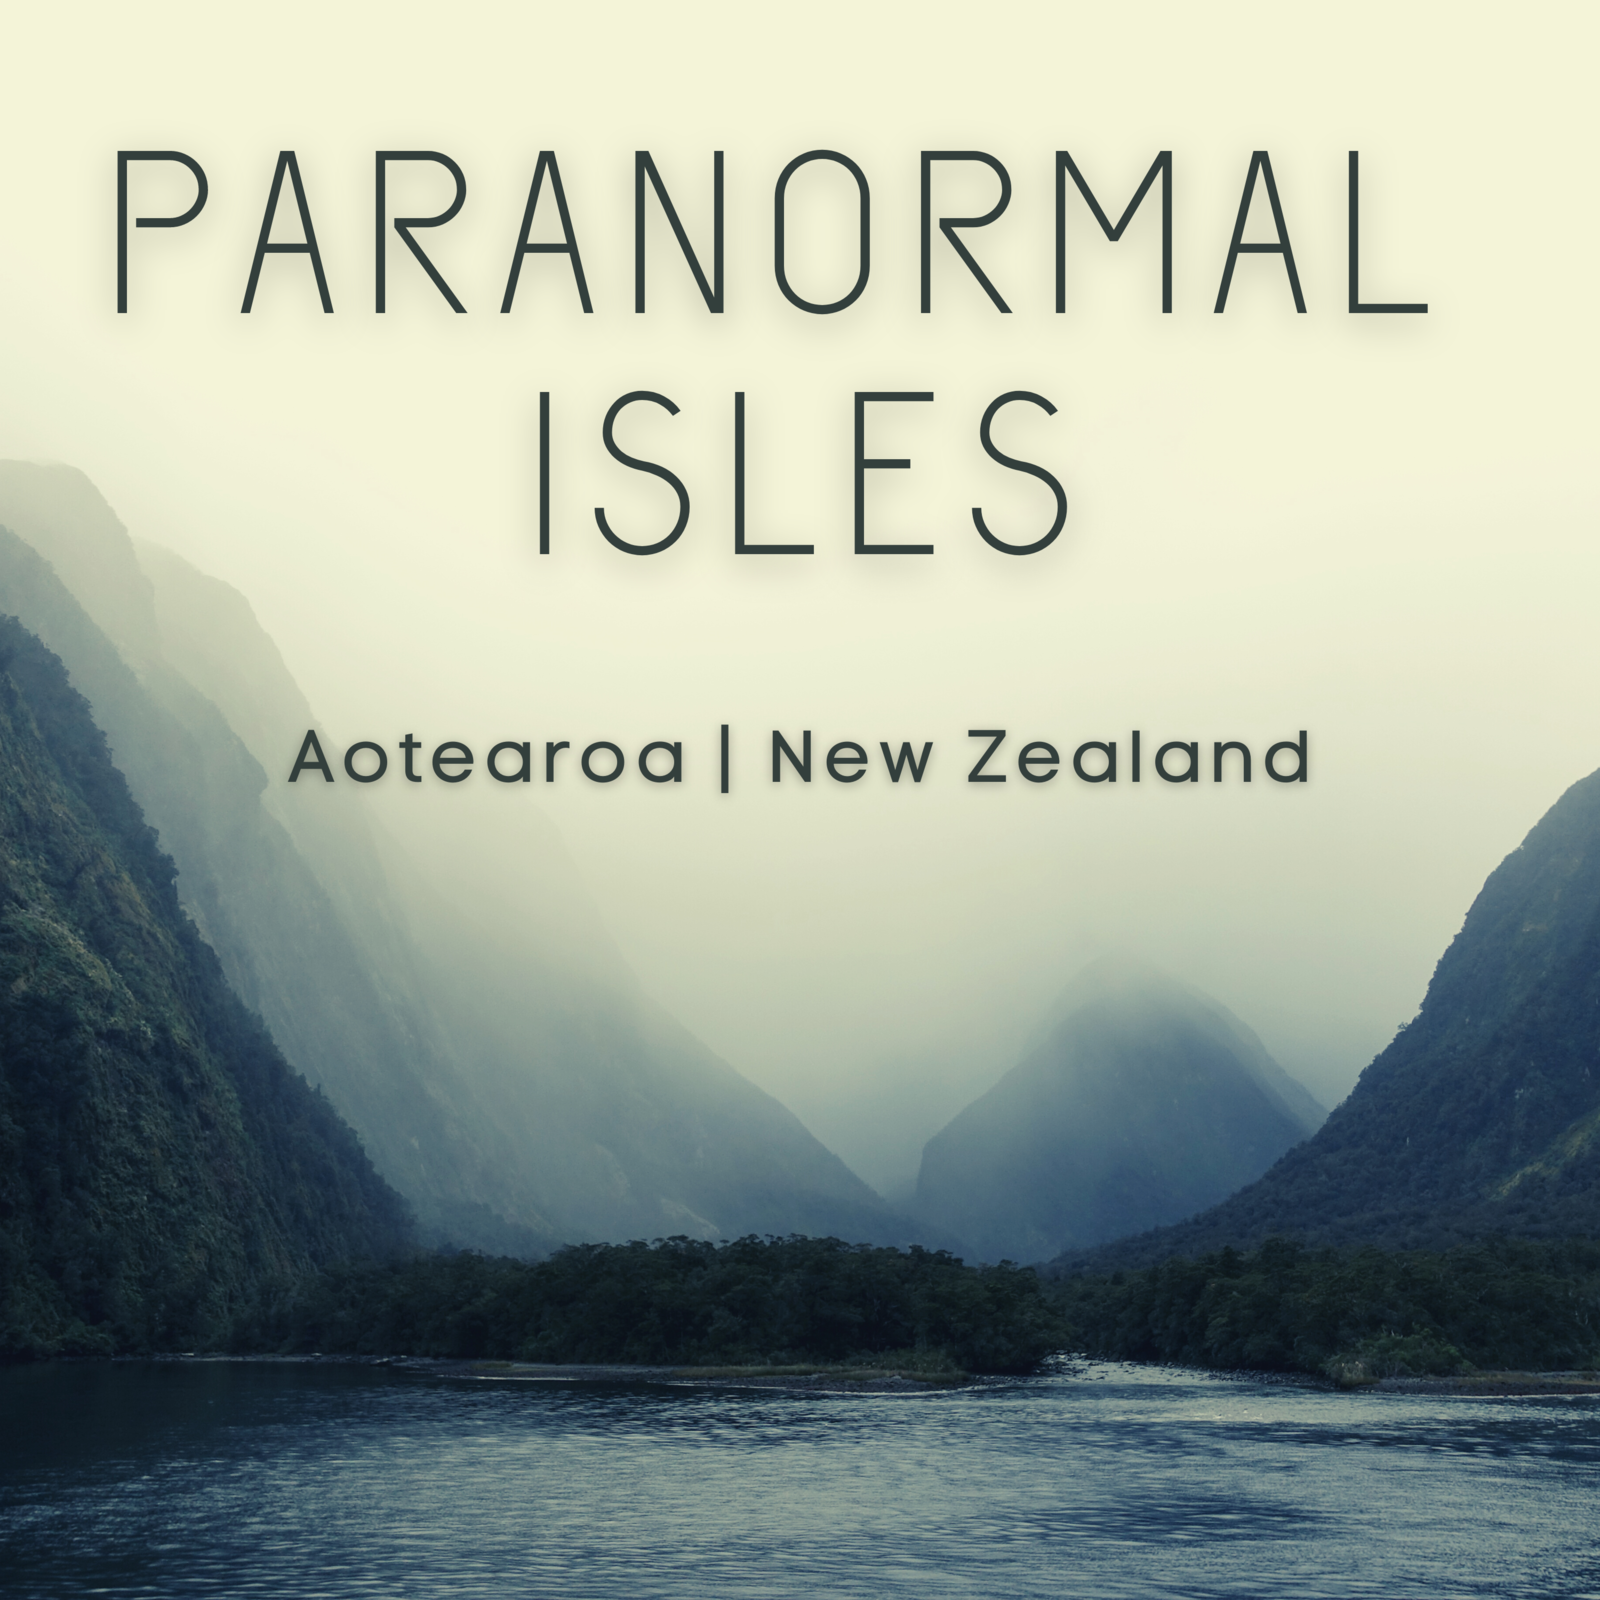 Introducing: Paranormal Isles